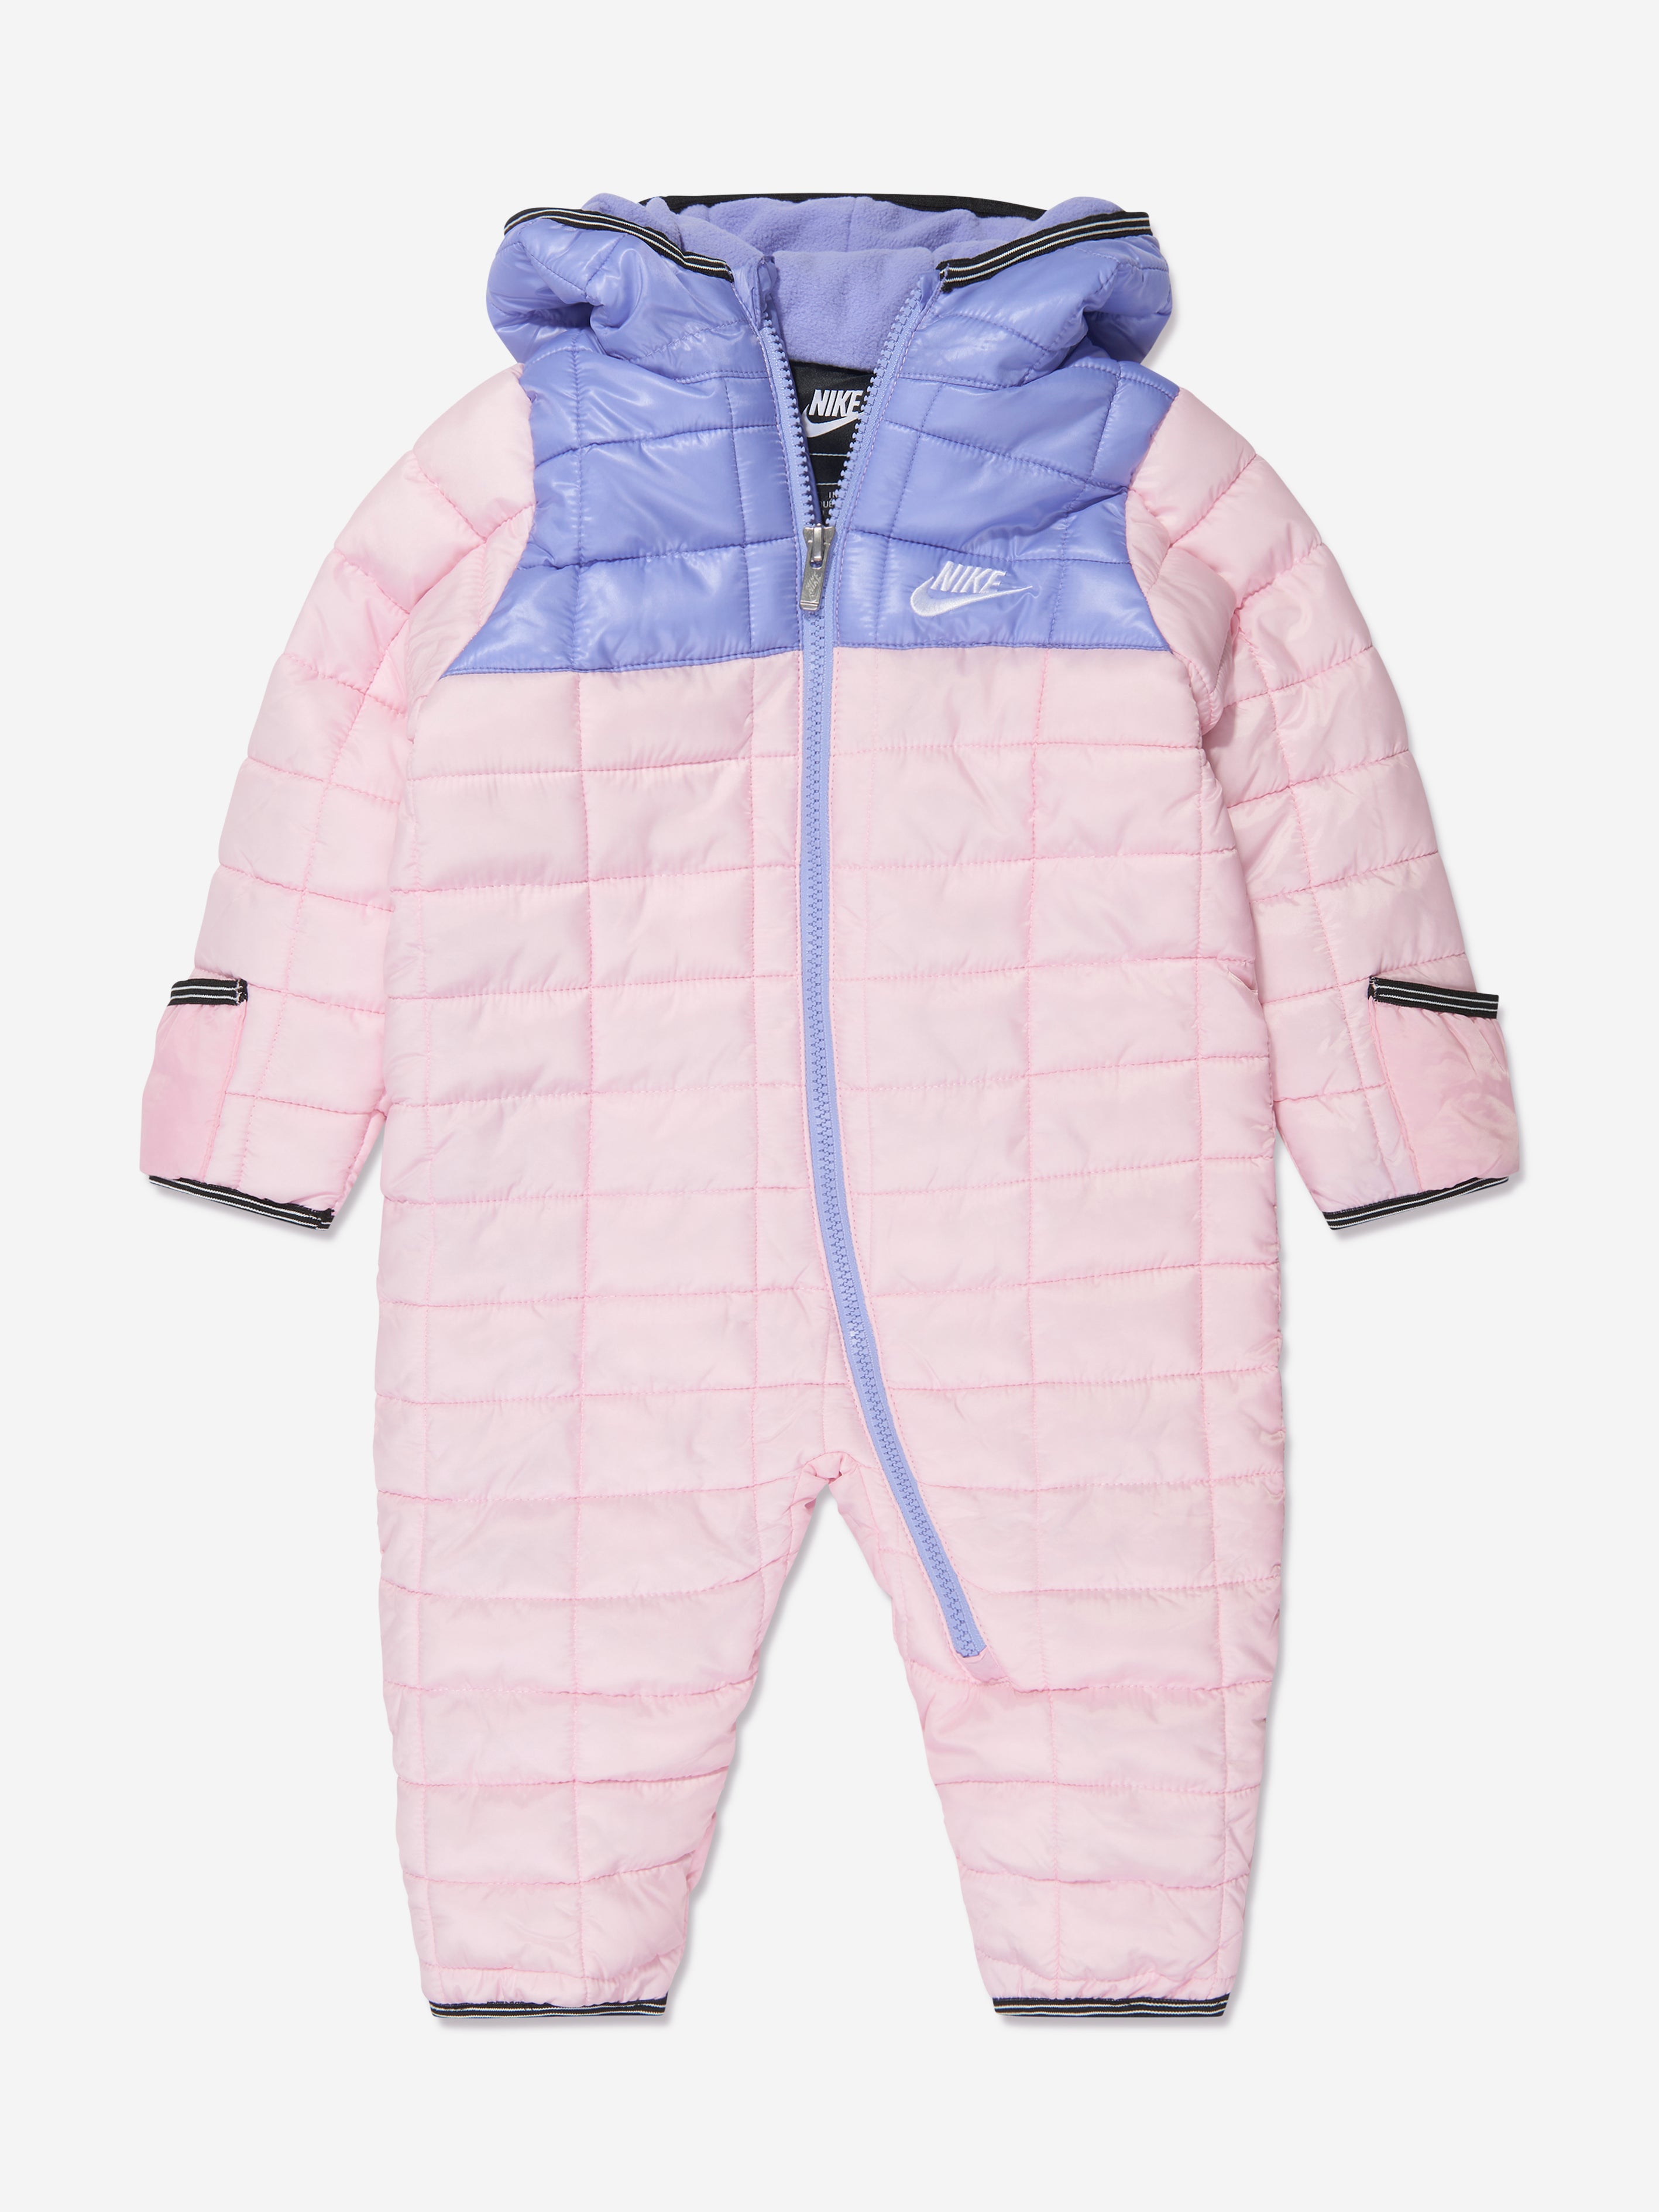 Childsplay Colourblock Pink Baby Snowsuit | in Girls Clothing